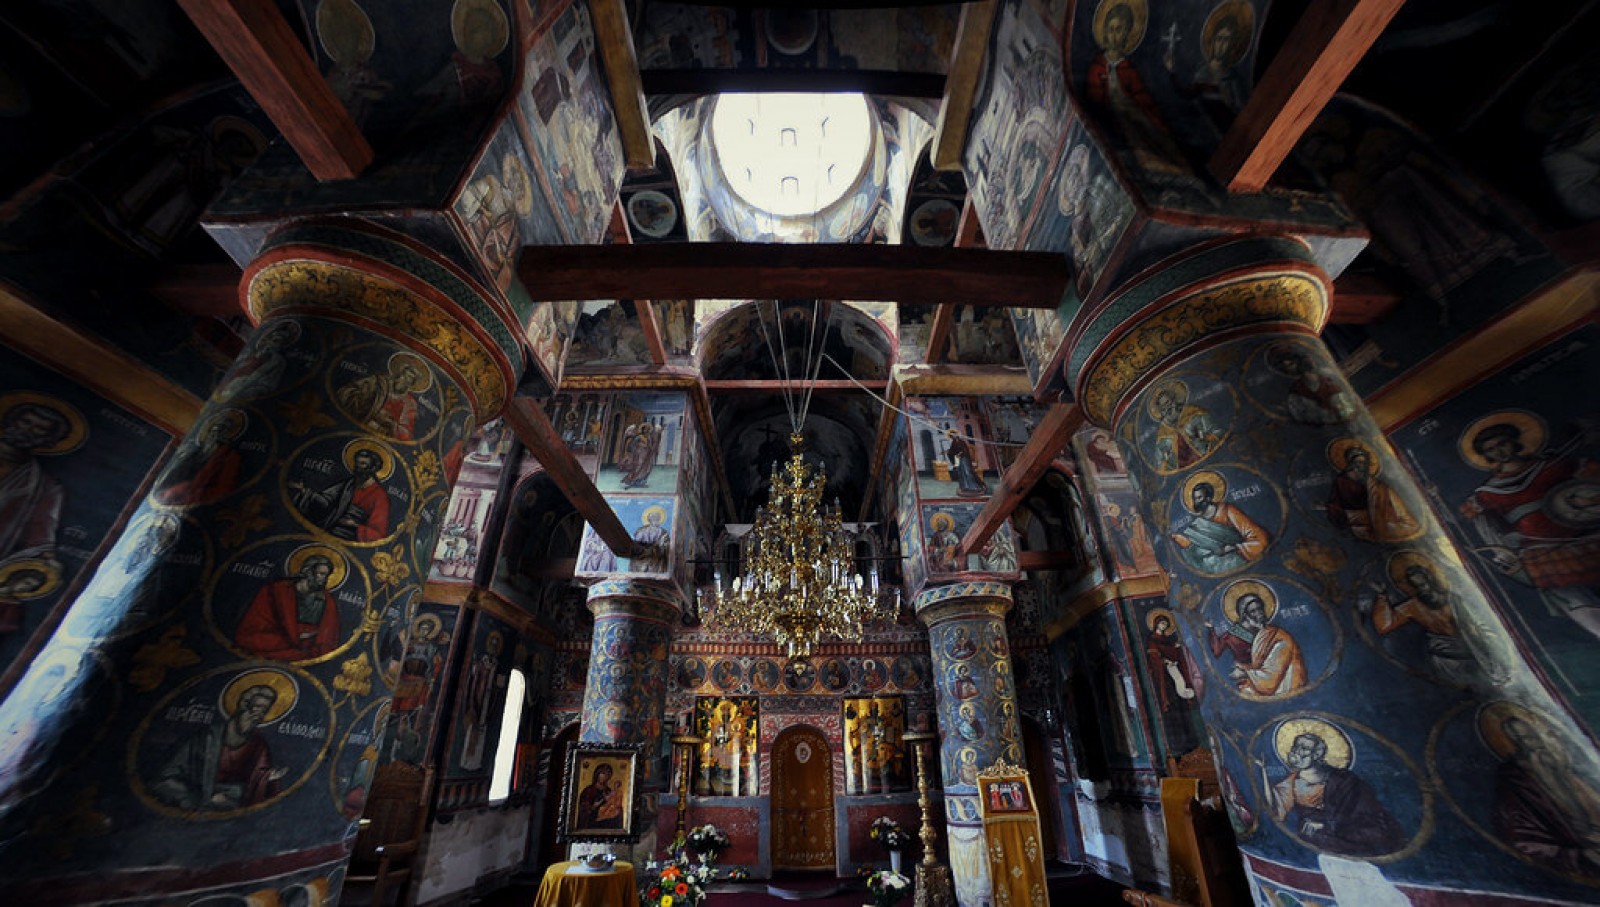 Mănăstirea Snagov 